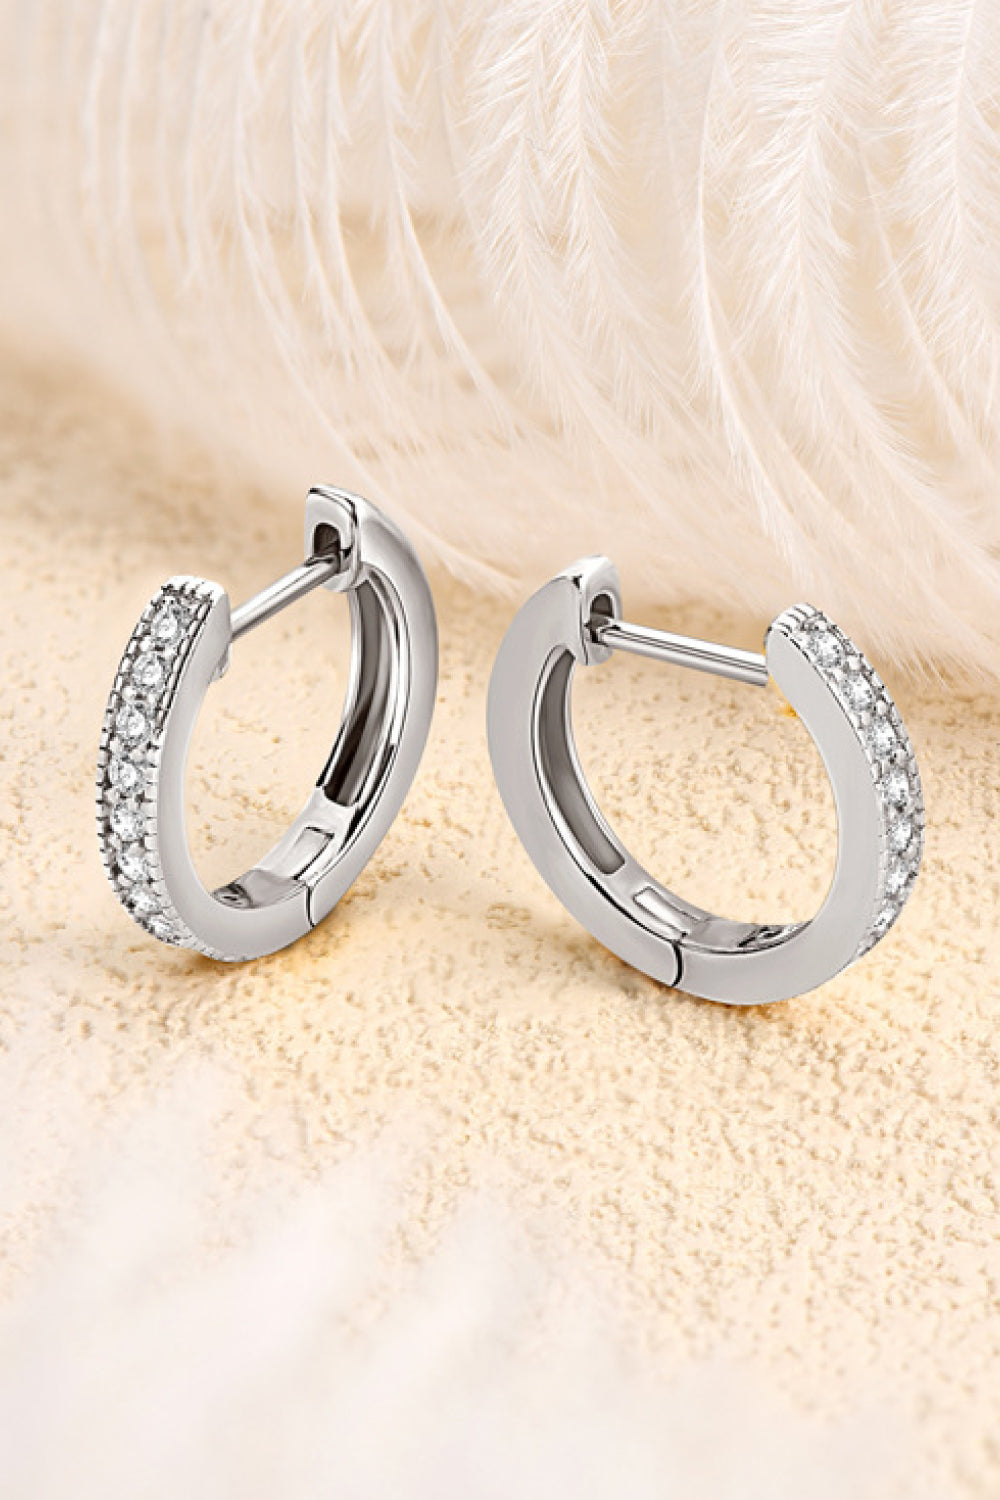 Inlaid Moissanite Hoop Earrings - Shop women apparel, Jewelry, bath & beauty products online - Arwen's Boutique